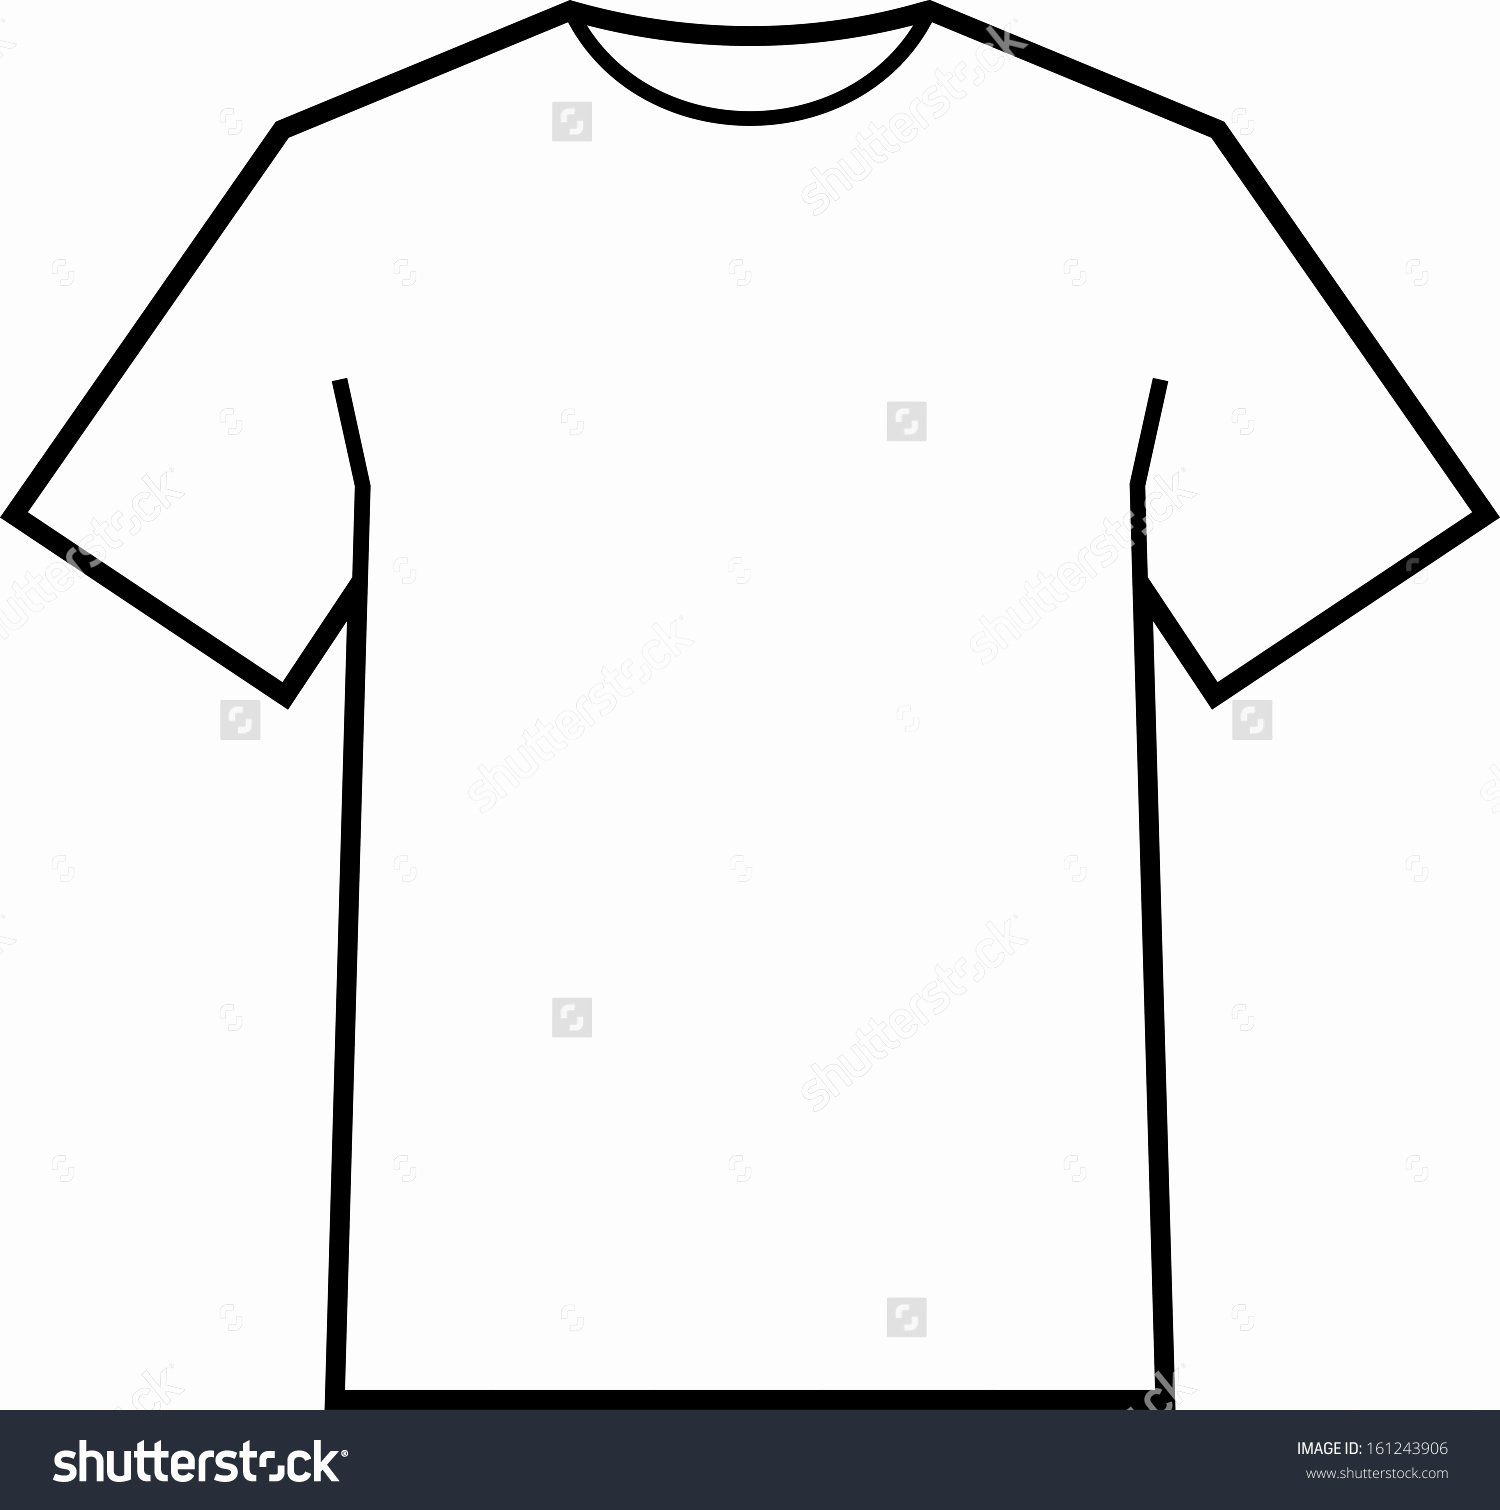 Blank Roblox Shirt Template Lovely Outline A T Shirt Template